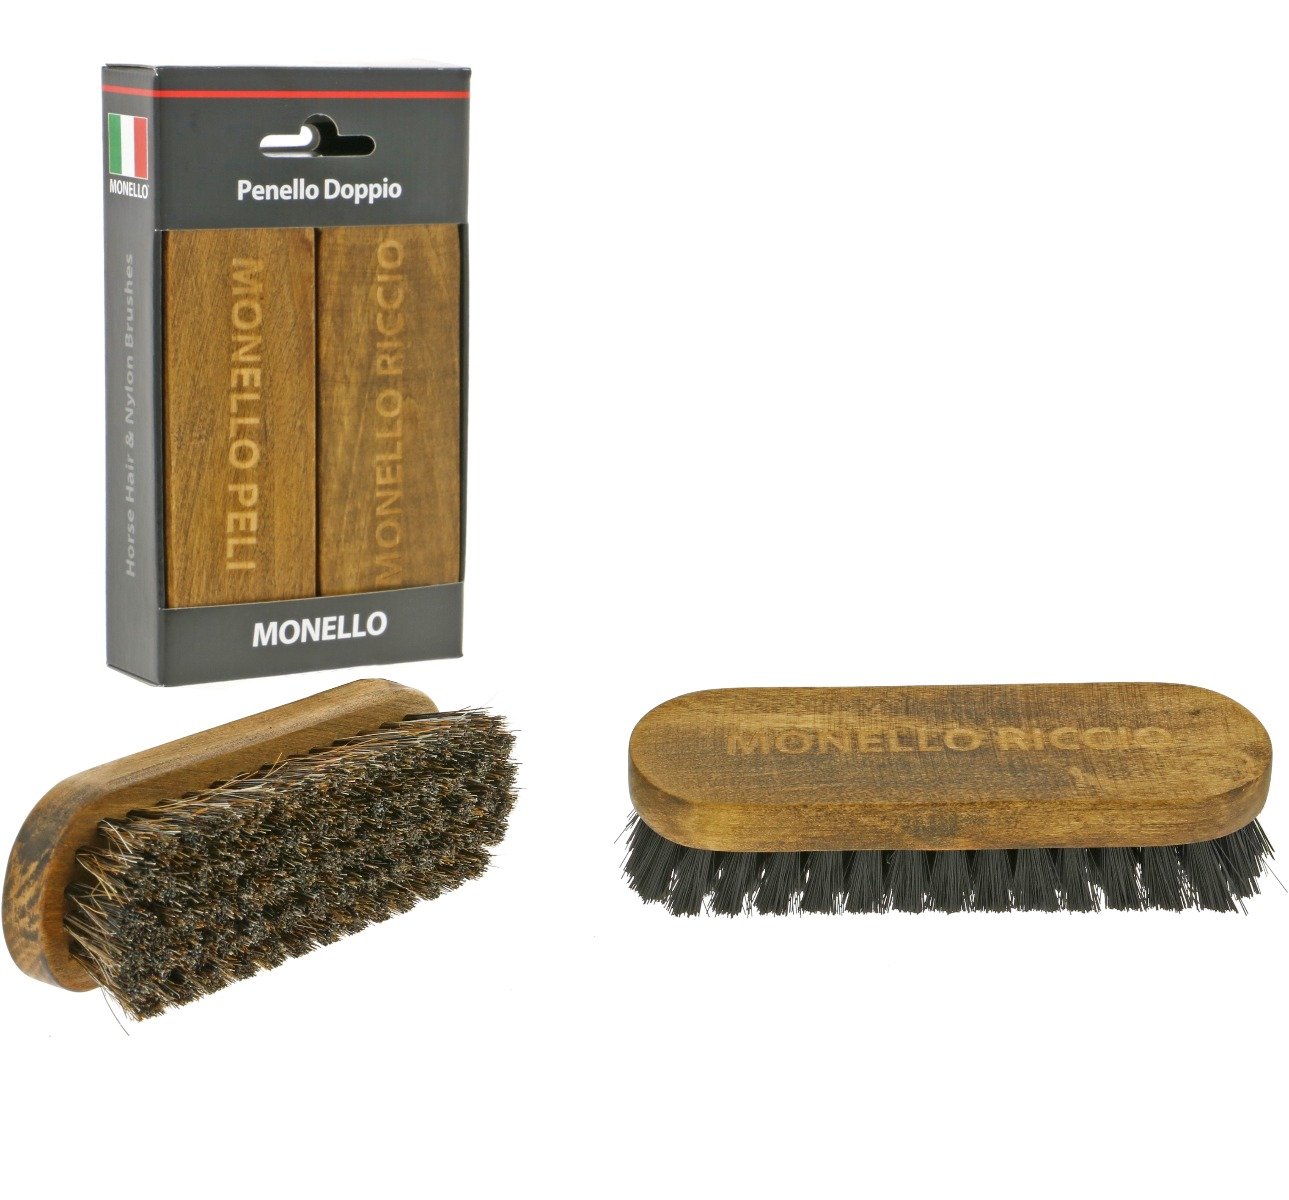 Pennello Doppio - Horse Hair & Nylon Brushes